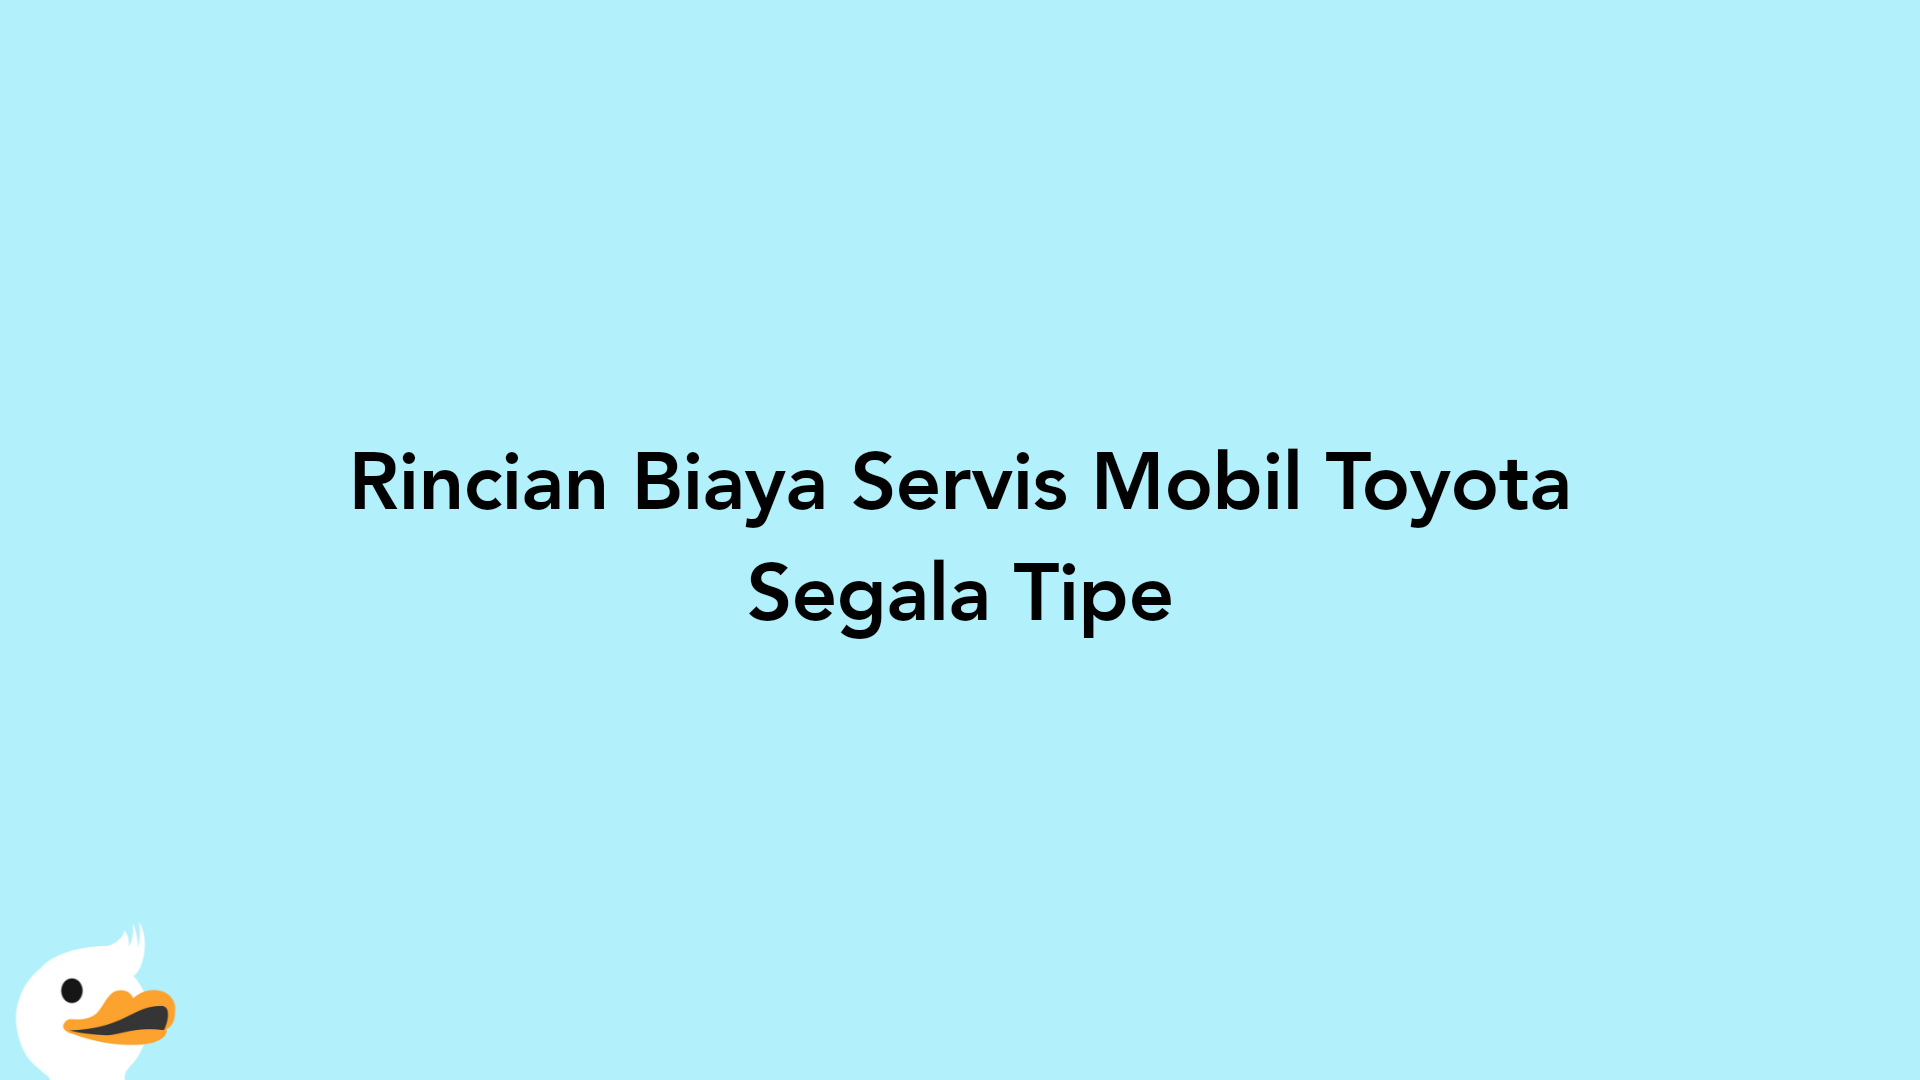 Rincian Biaya Servis Mobil Toyota Segala Tipe